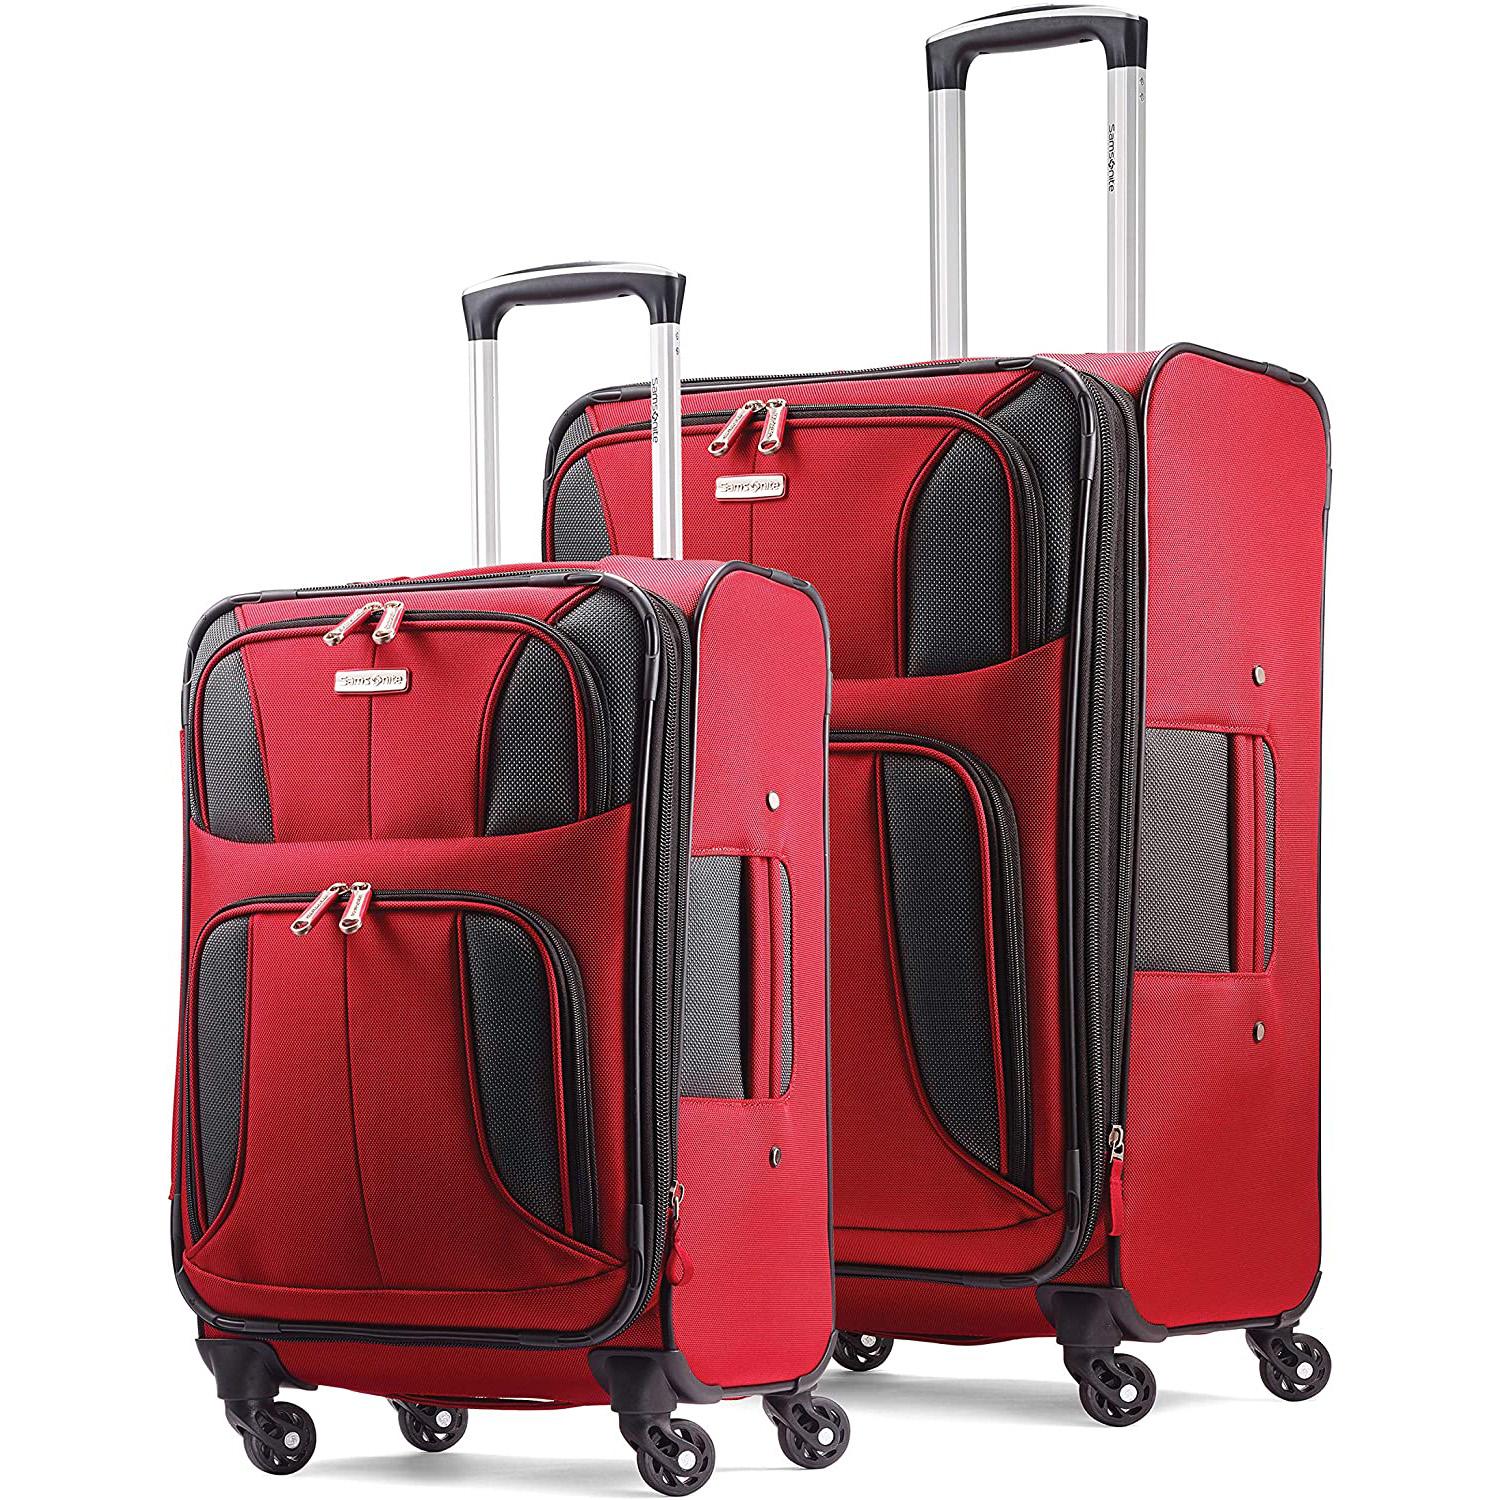 Samsonite Aspire Xlite Softside Expandable 2-Piece Luggage for $119.99 Shipped